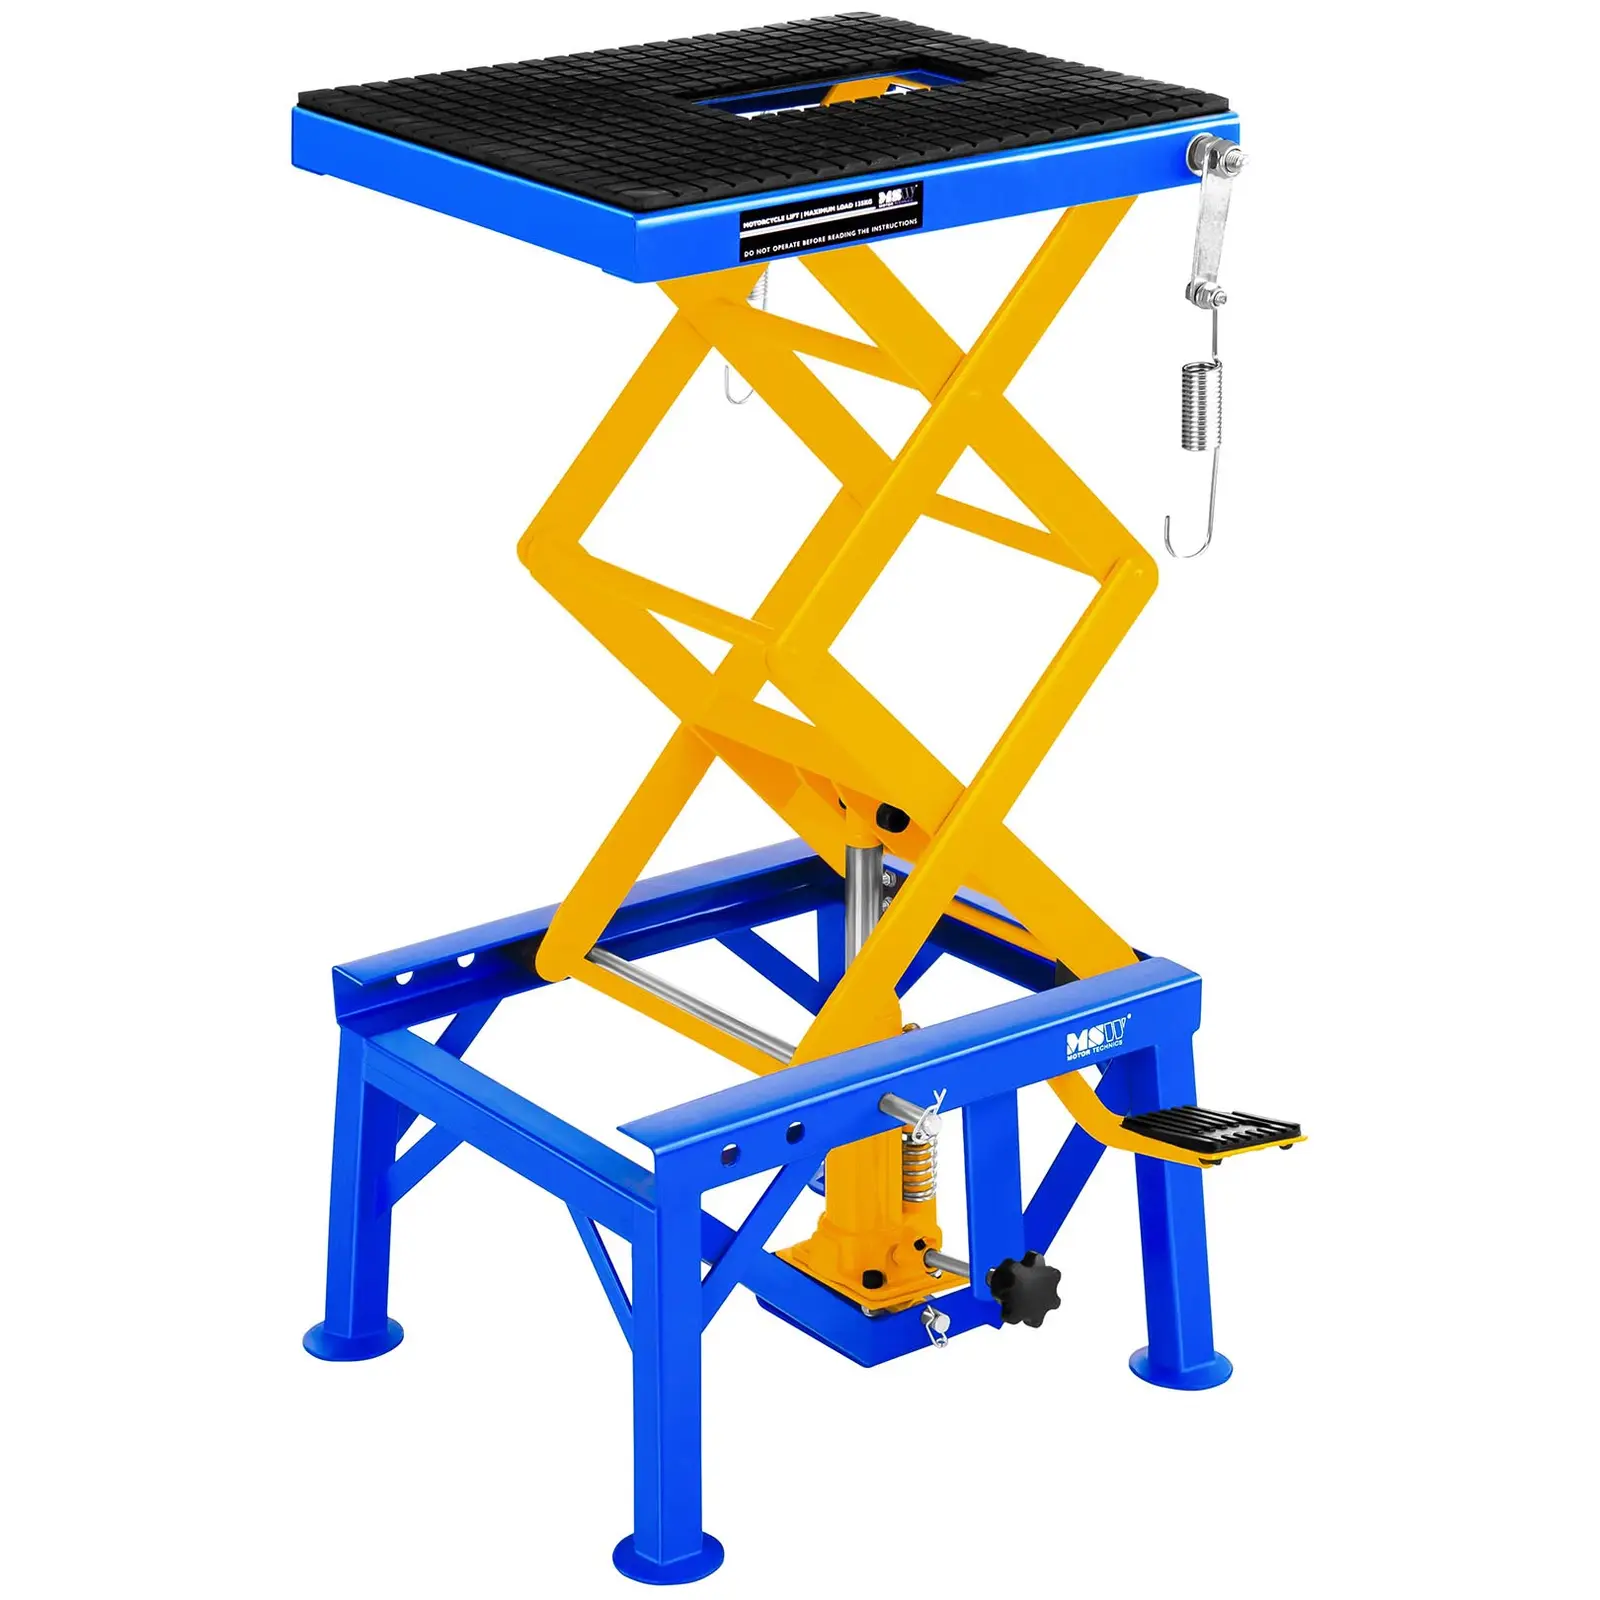 Mobile Lift Table - 135 kg